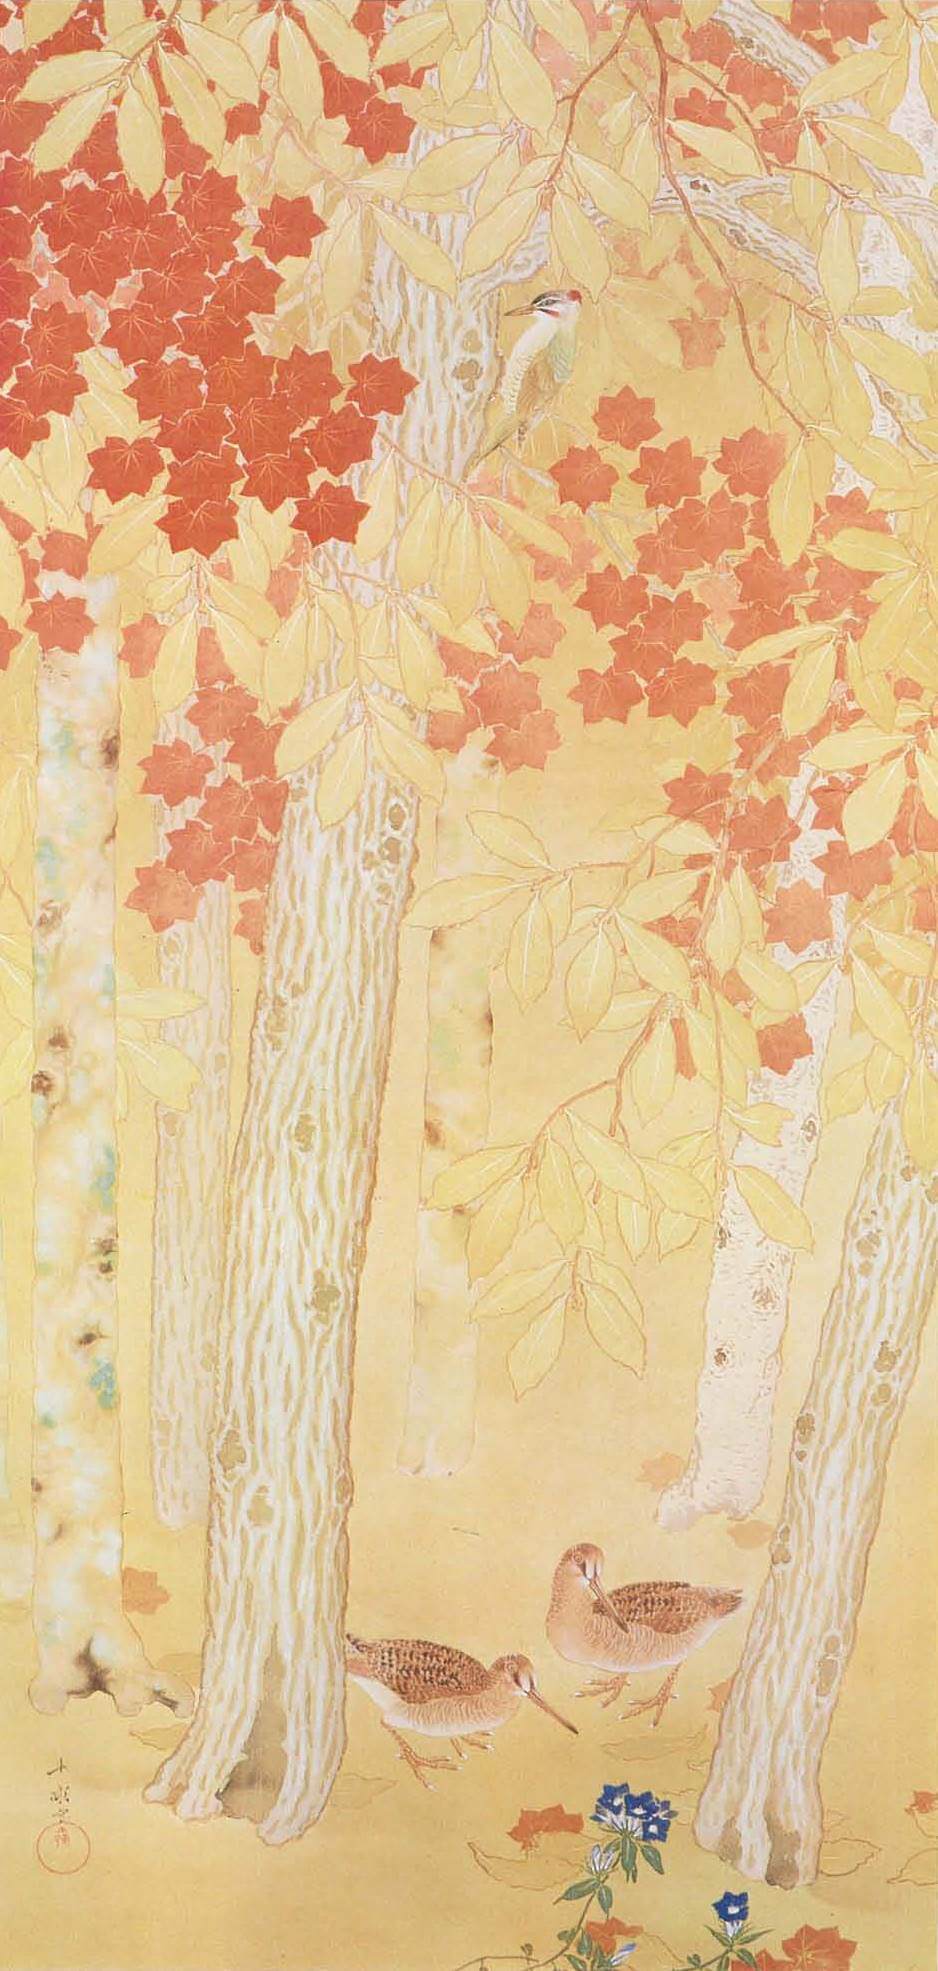 Flowers and Birds of the Four Seasons: Autumn by Araki Jippo